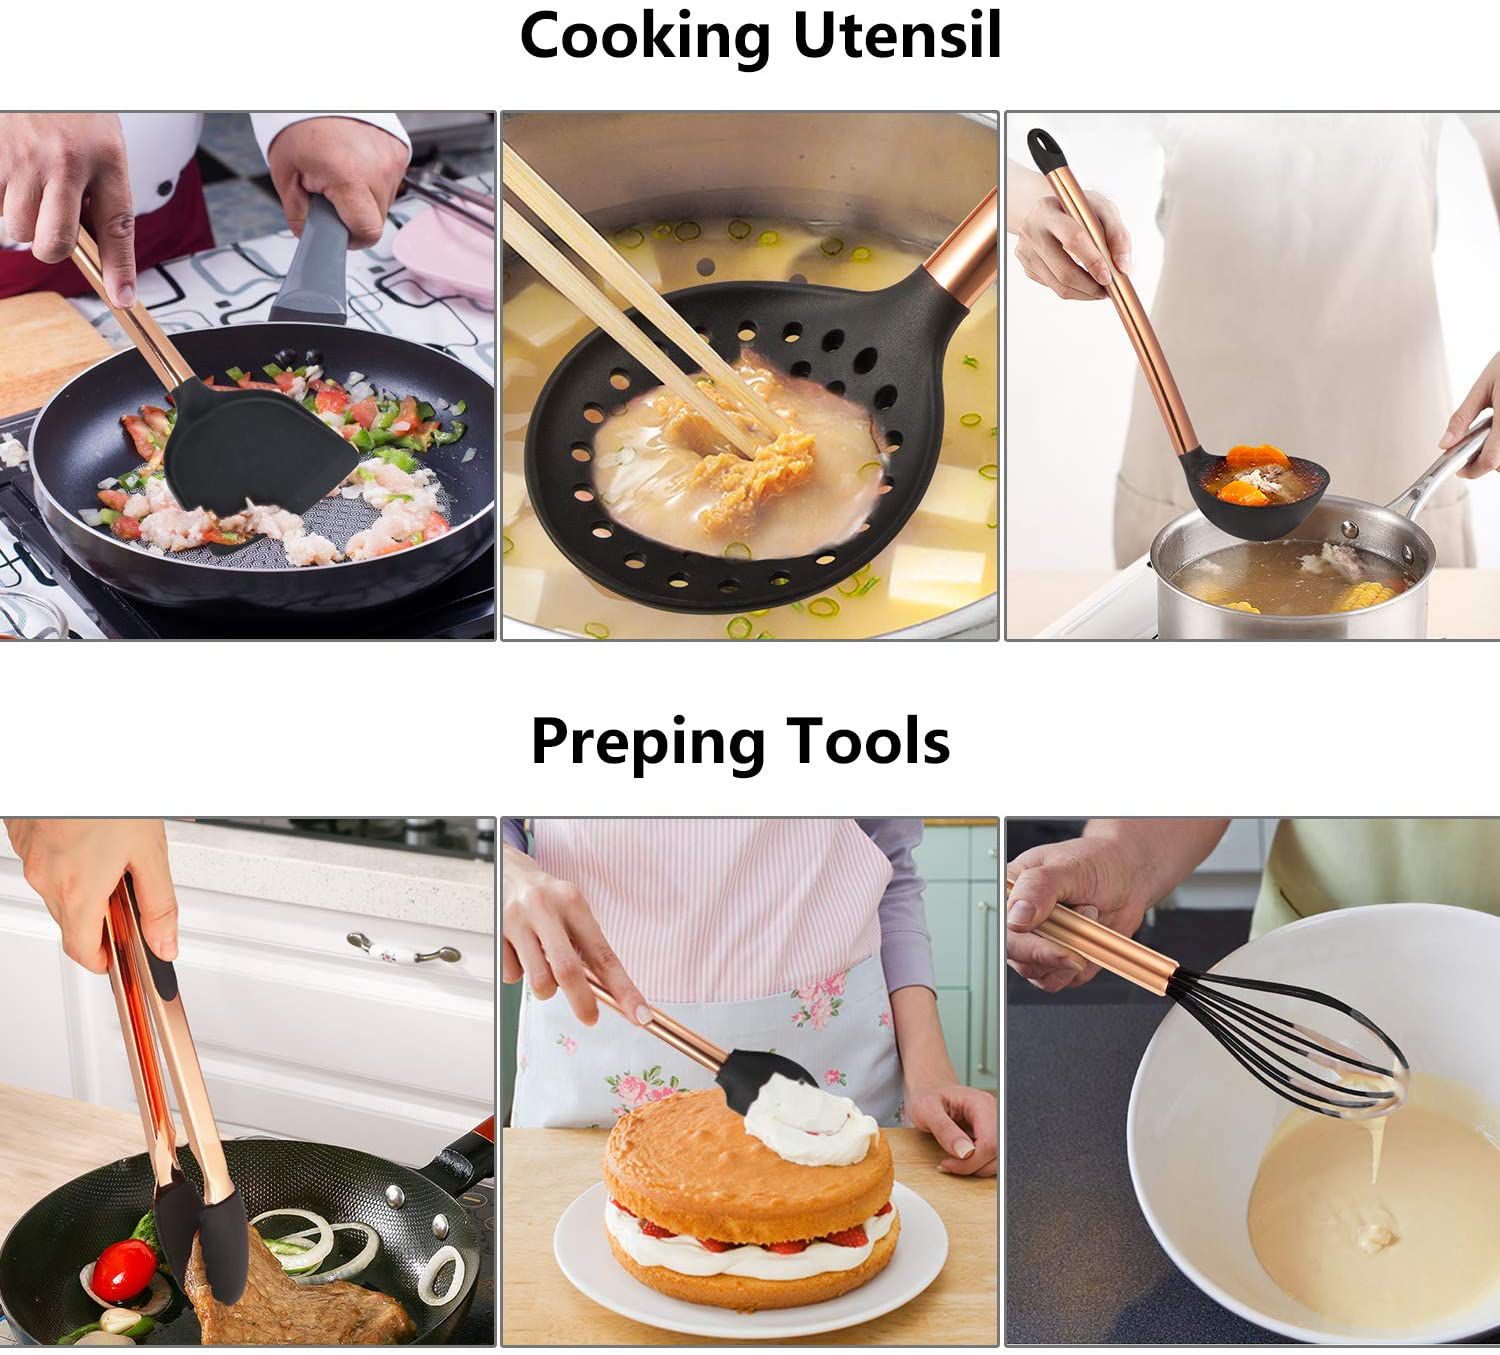 Mibote 17 Pcs Kitchen Utensils Set with Holder, Silicone Cooking Kitchen Utensils Set with Stainless Steel Handle (Copper)